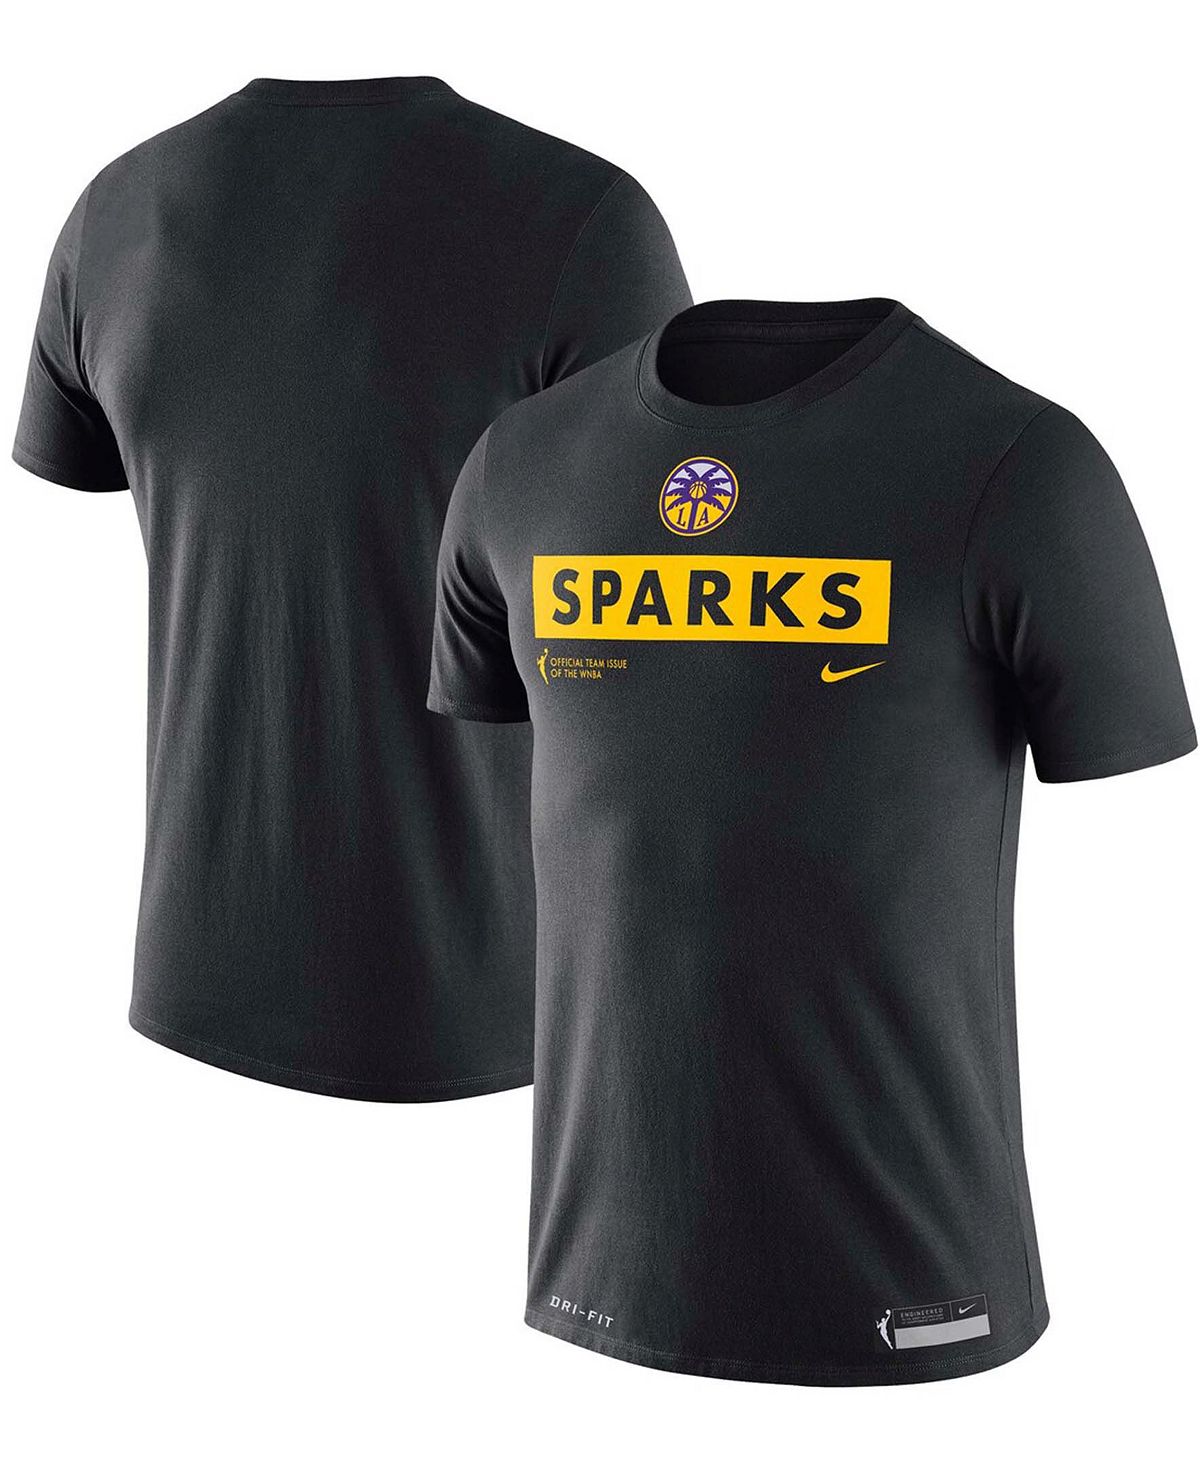 Мужская черная футболка los angeles sparks для тренировок Nike, черный cool shops los angeles